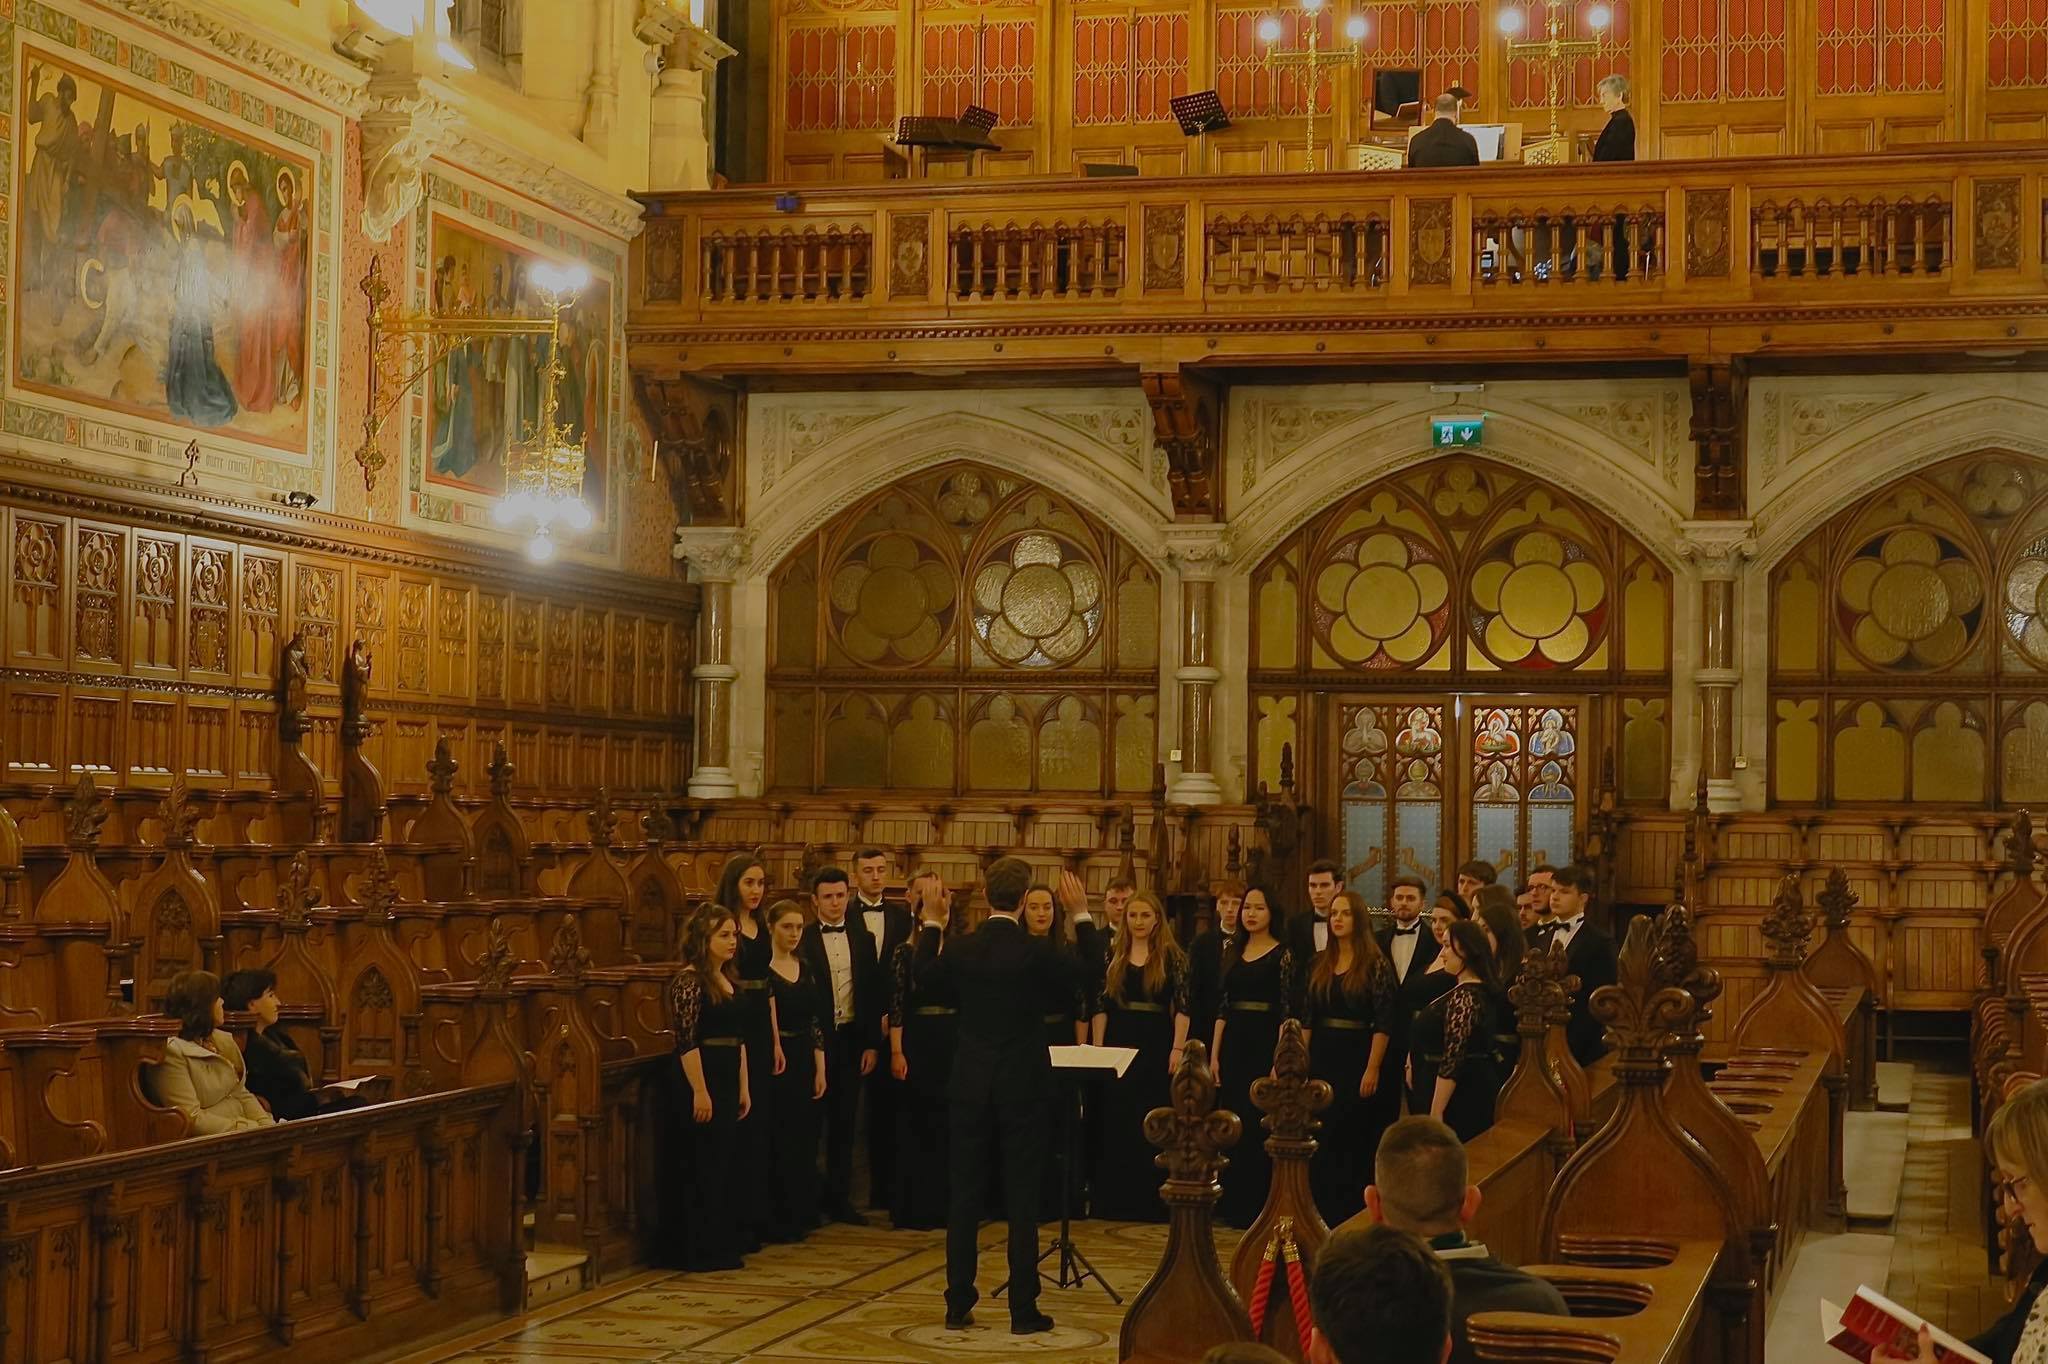 Maynooth-University-Chamber-Choir-in-the-Chapel.jpg#asset:9315